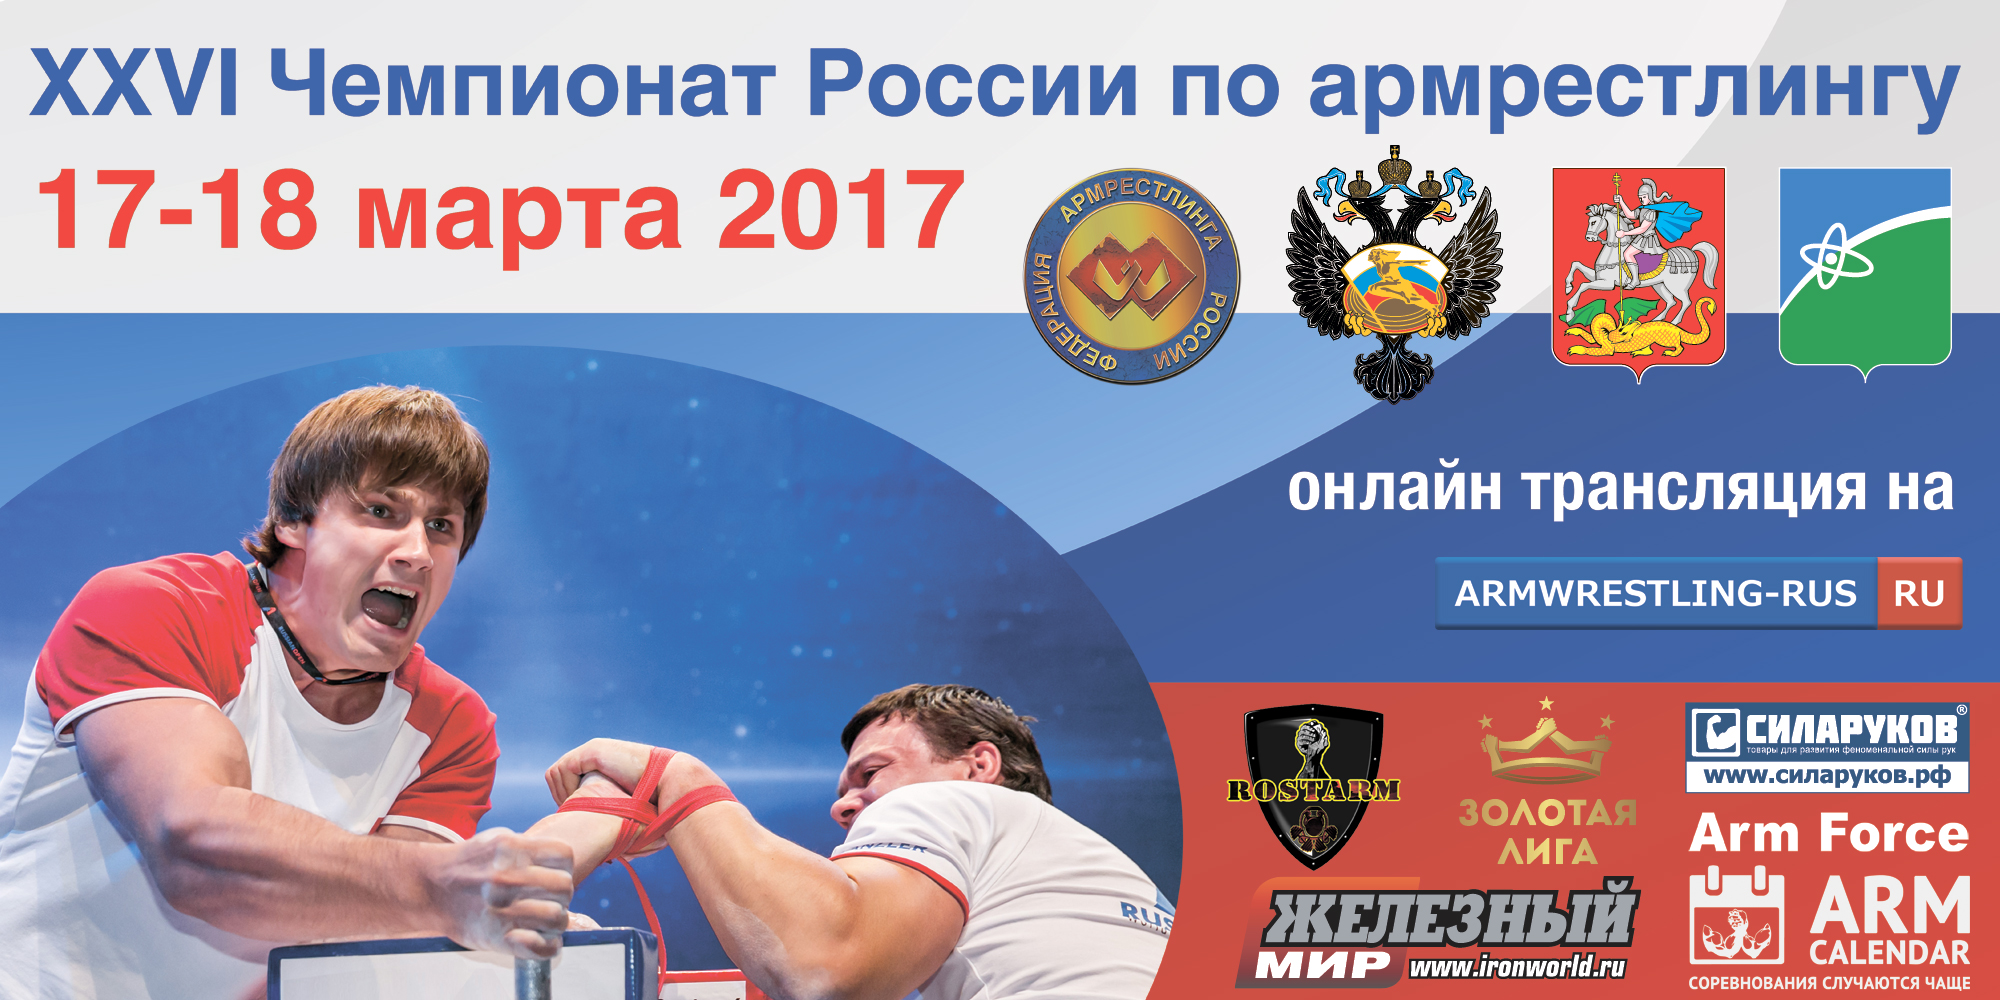 XXVI Чемпионат России по армрестлингу 2017